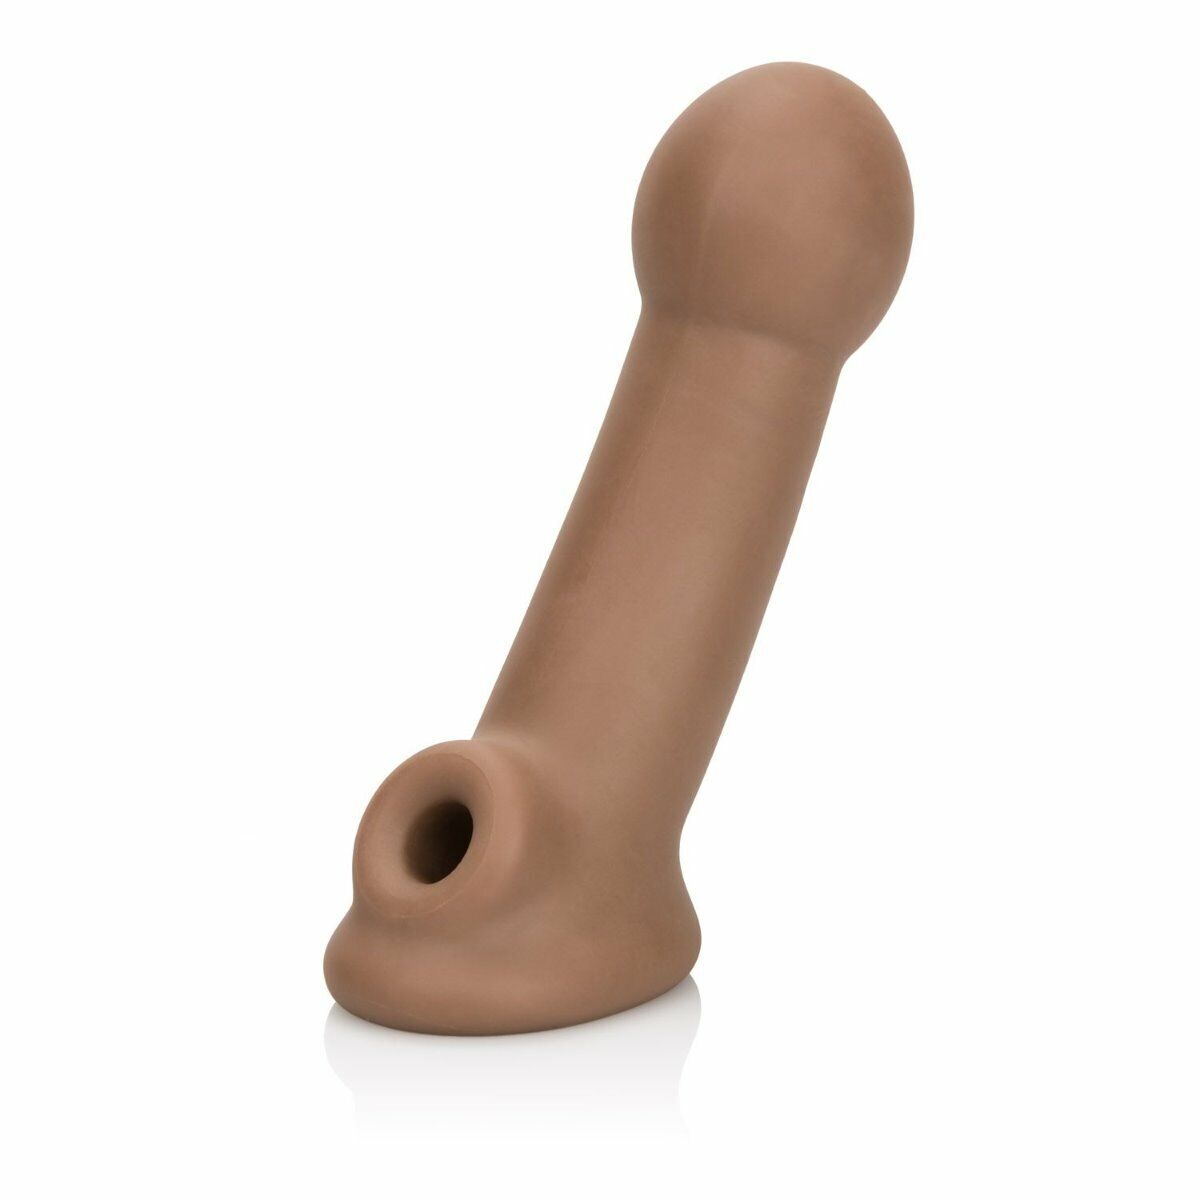 Thick Penis Extension Extender Cock Sheath Sleeve Girth Enhancer Enlarger